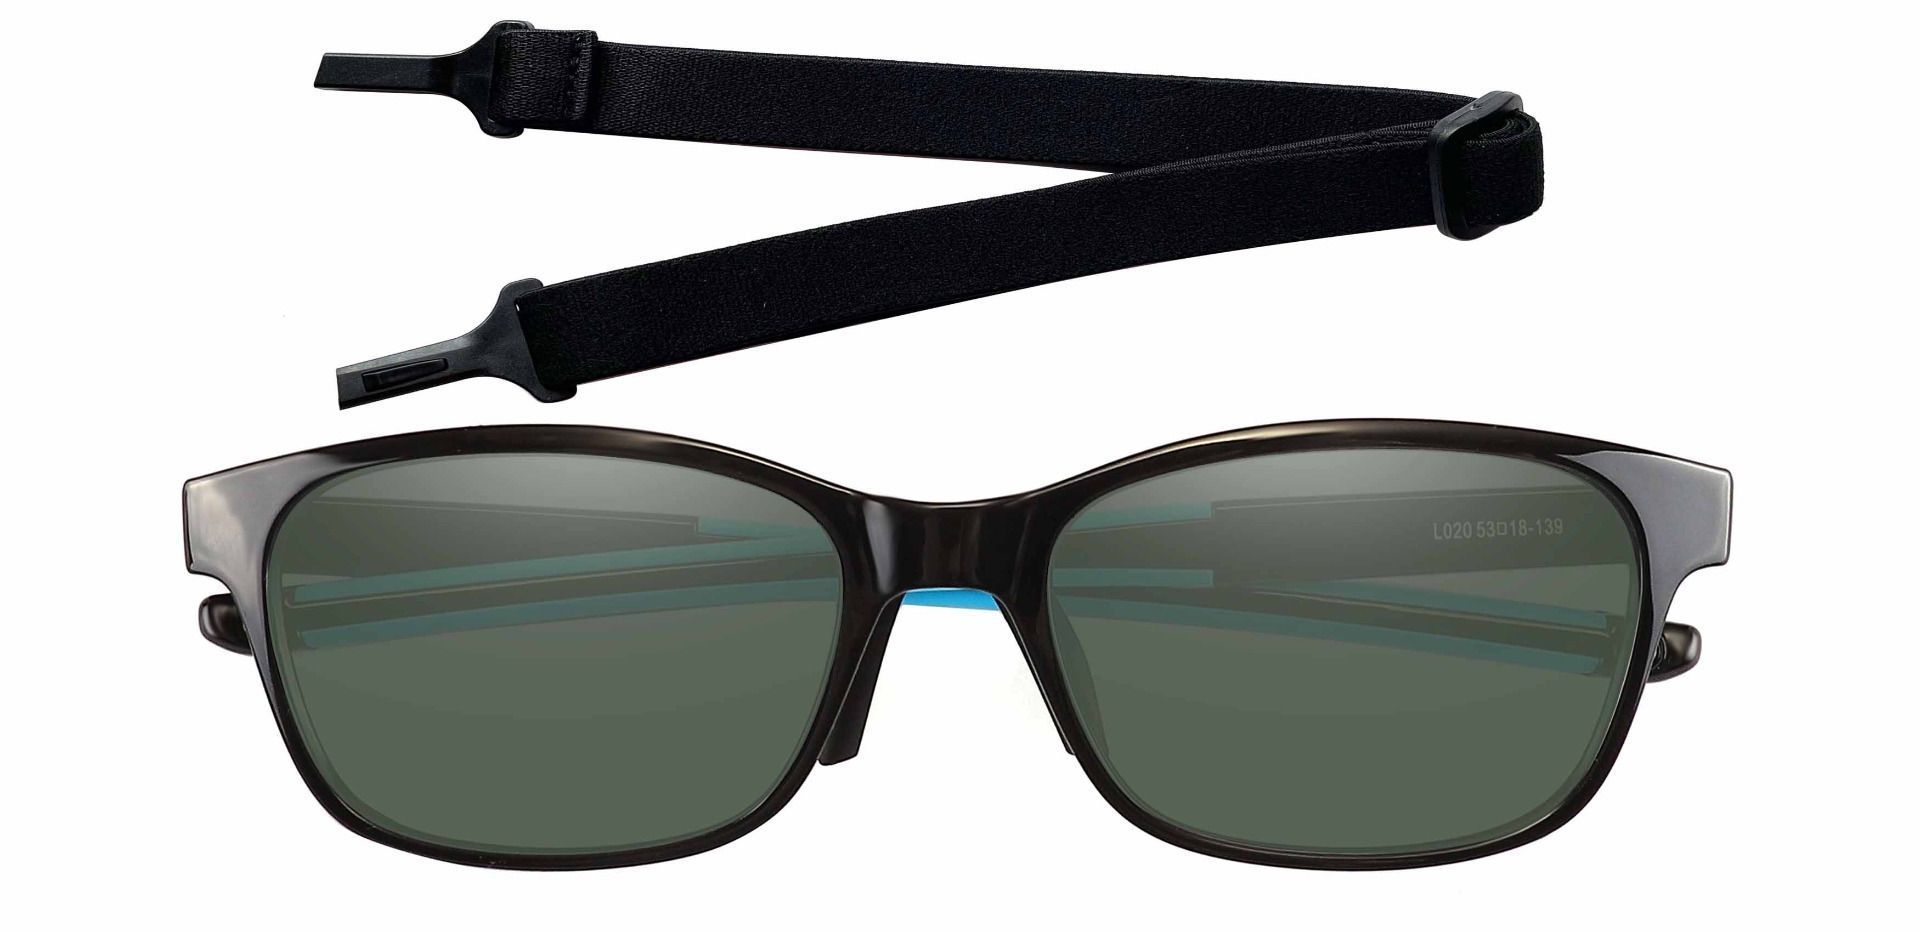 Higgins Rectangle Prescription Sunglasses - Black Frame With Green Lenses